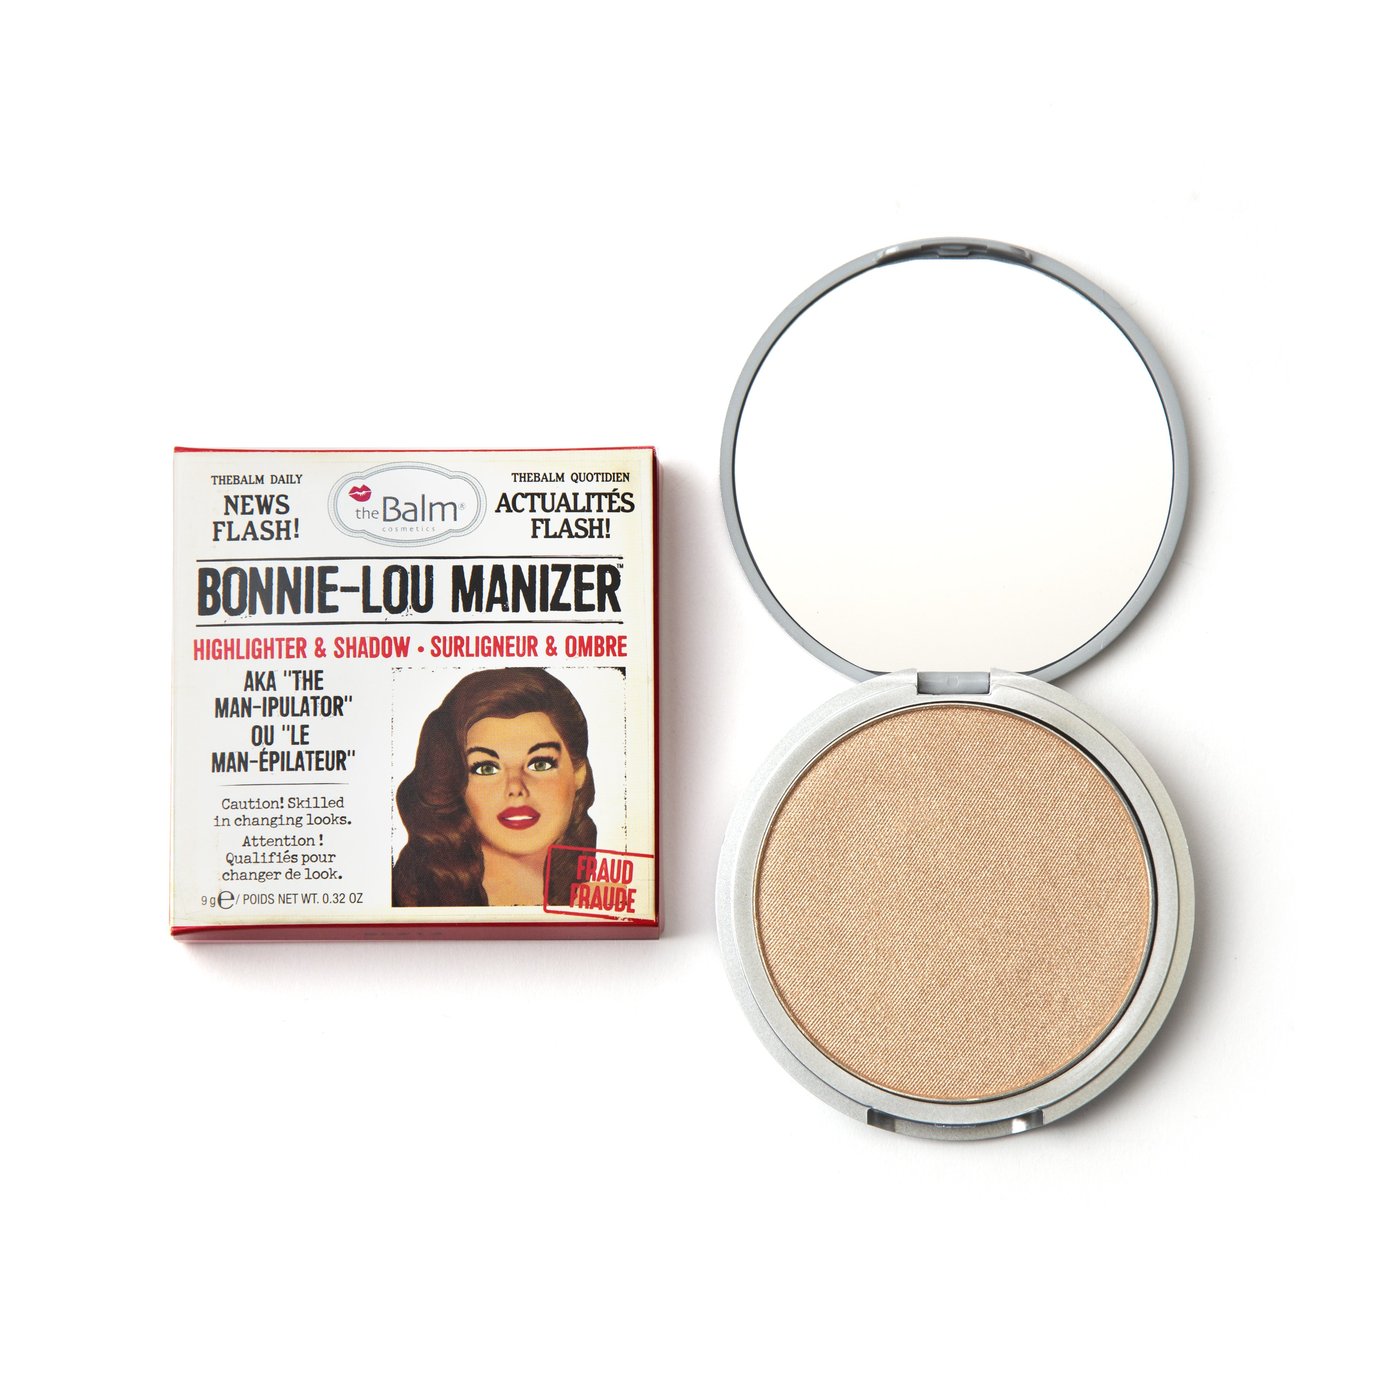 The Balm cosmetics Bonnie-Lou Manizer Highlighter & Shimmer